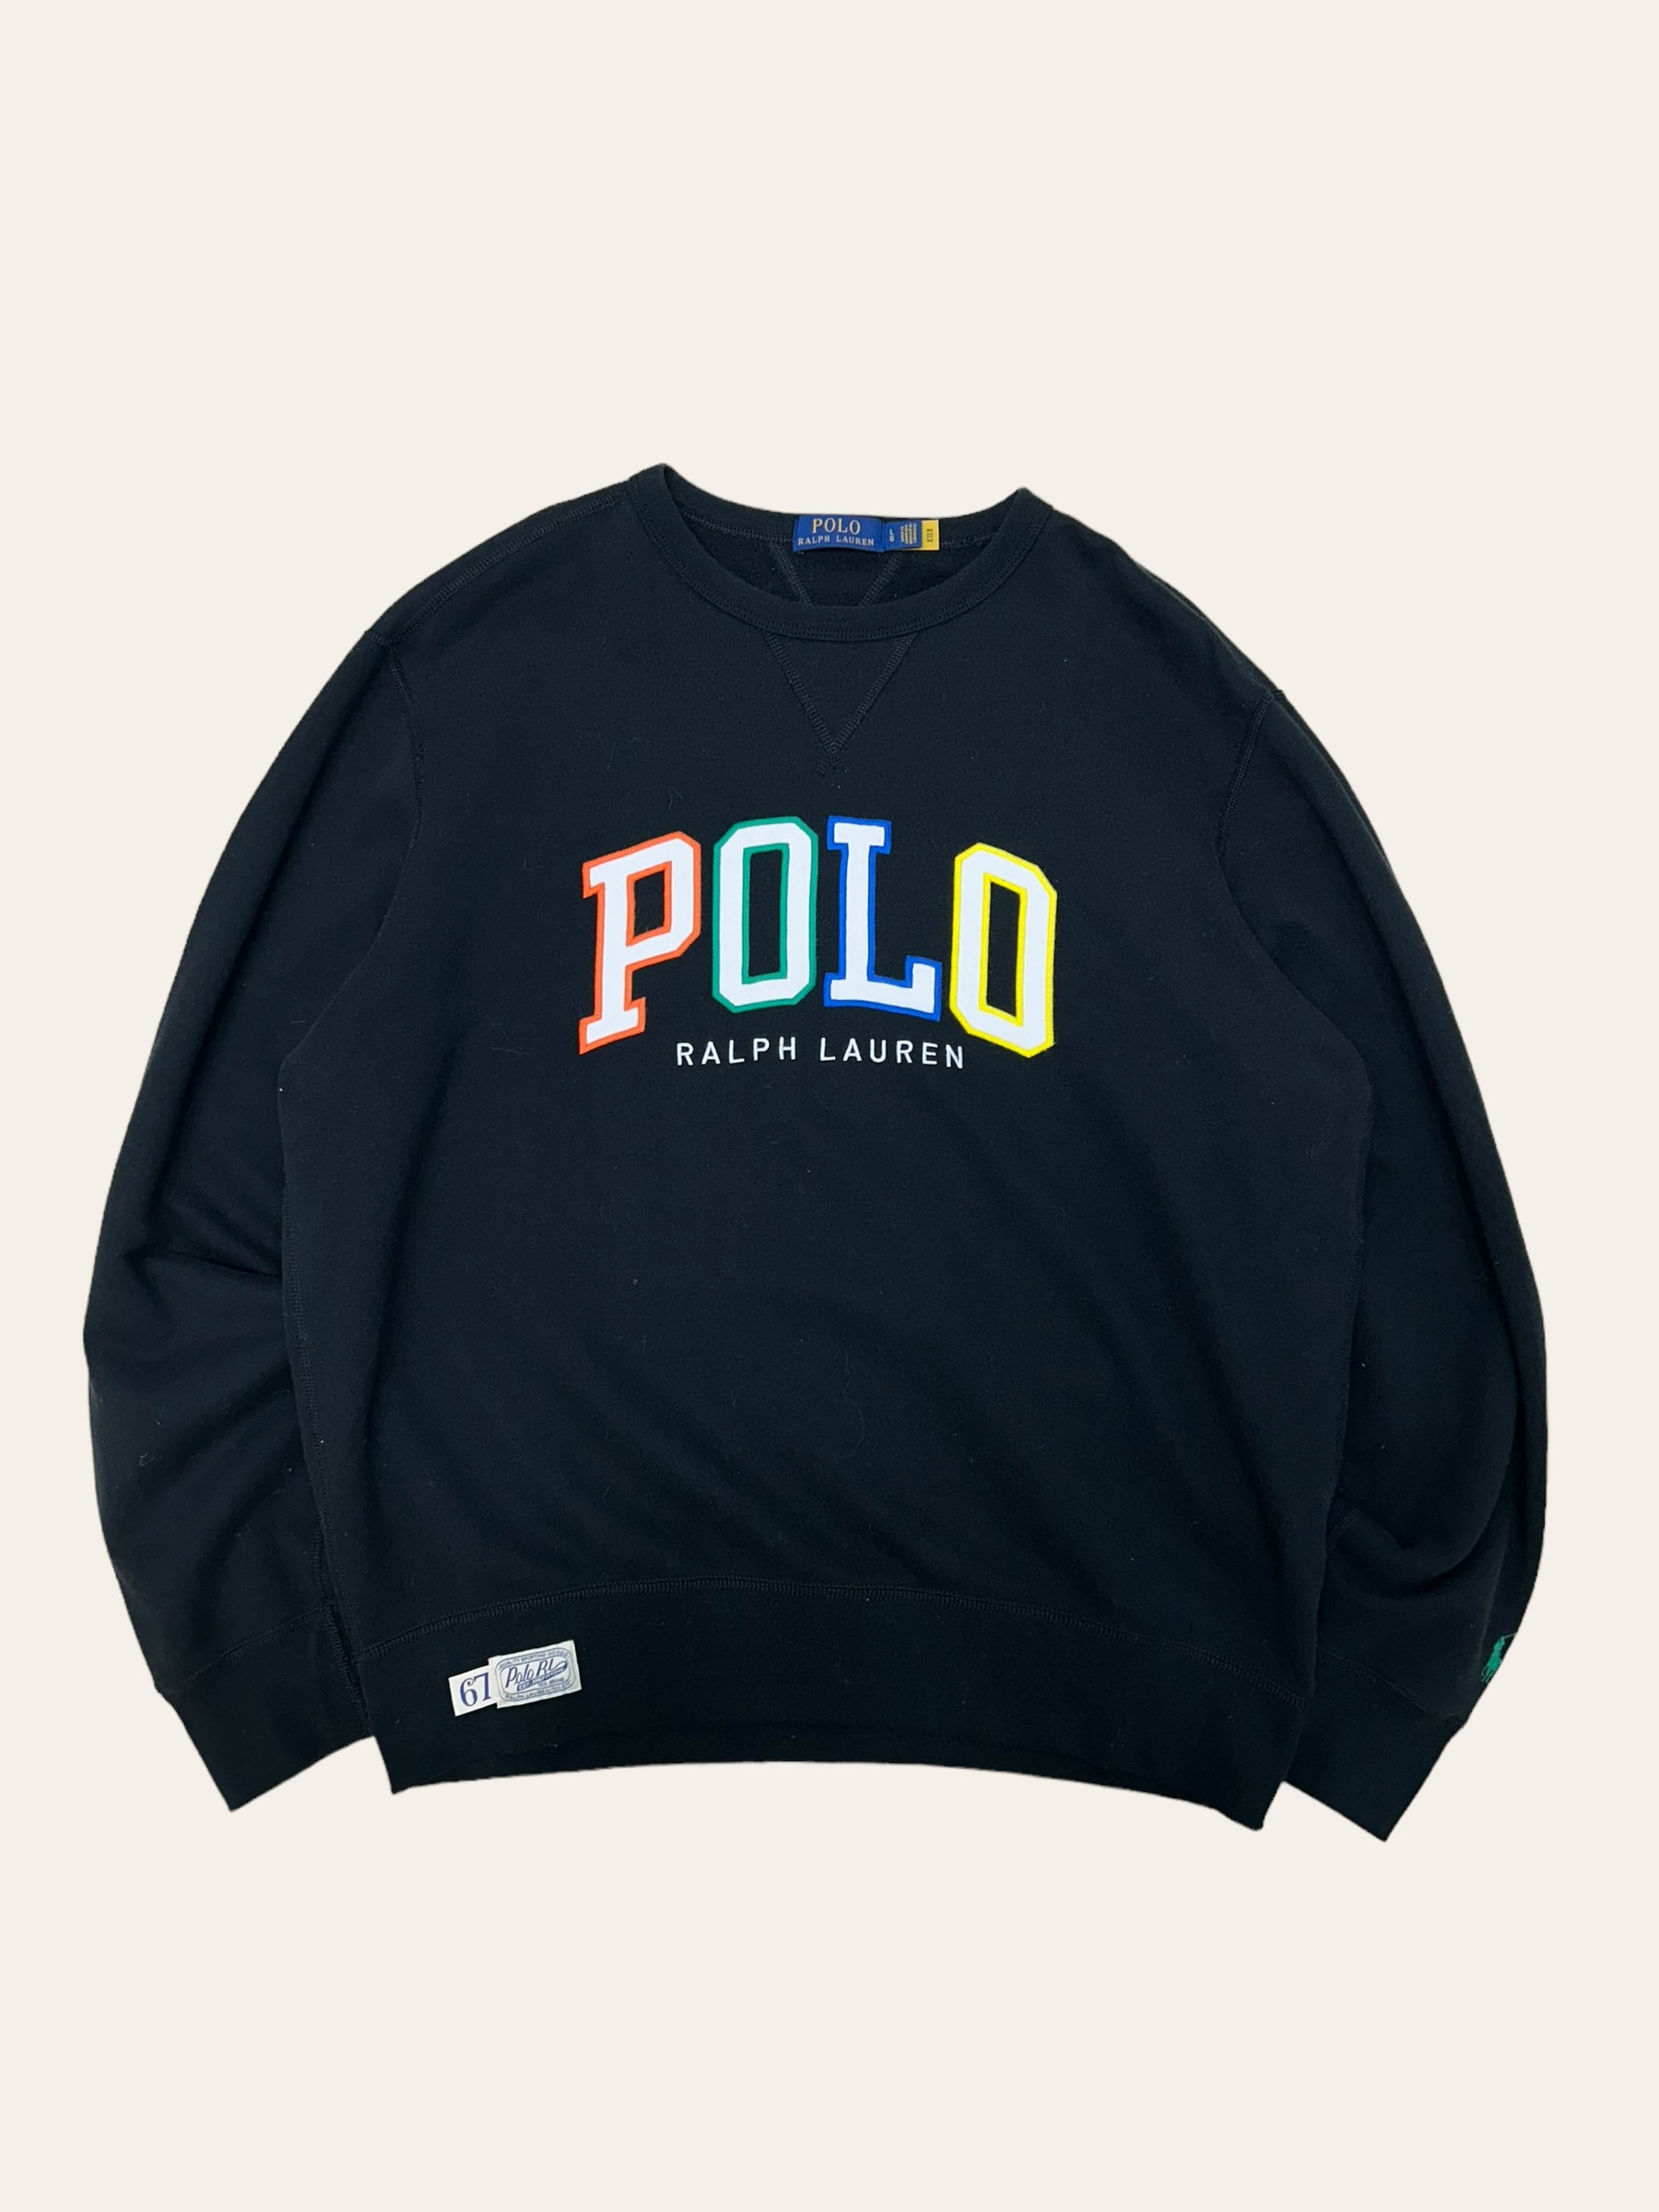 Polo ralph lauren multicolor spell out sweatshirt L